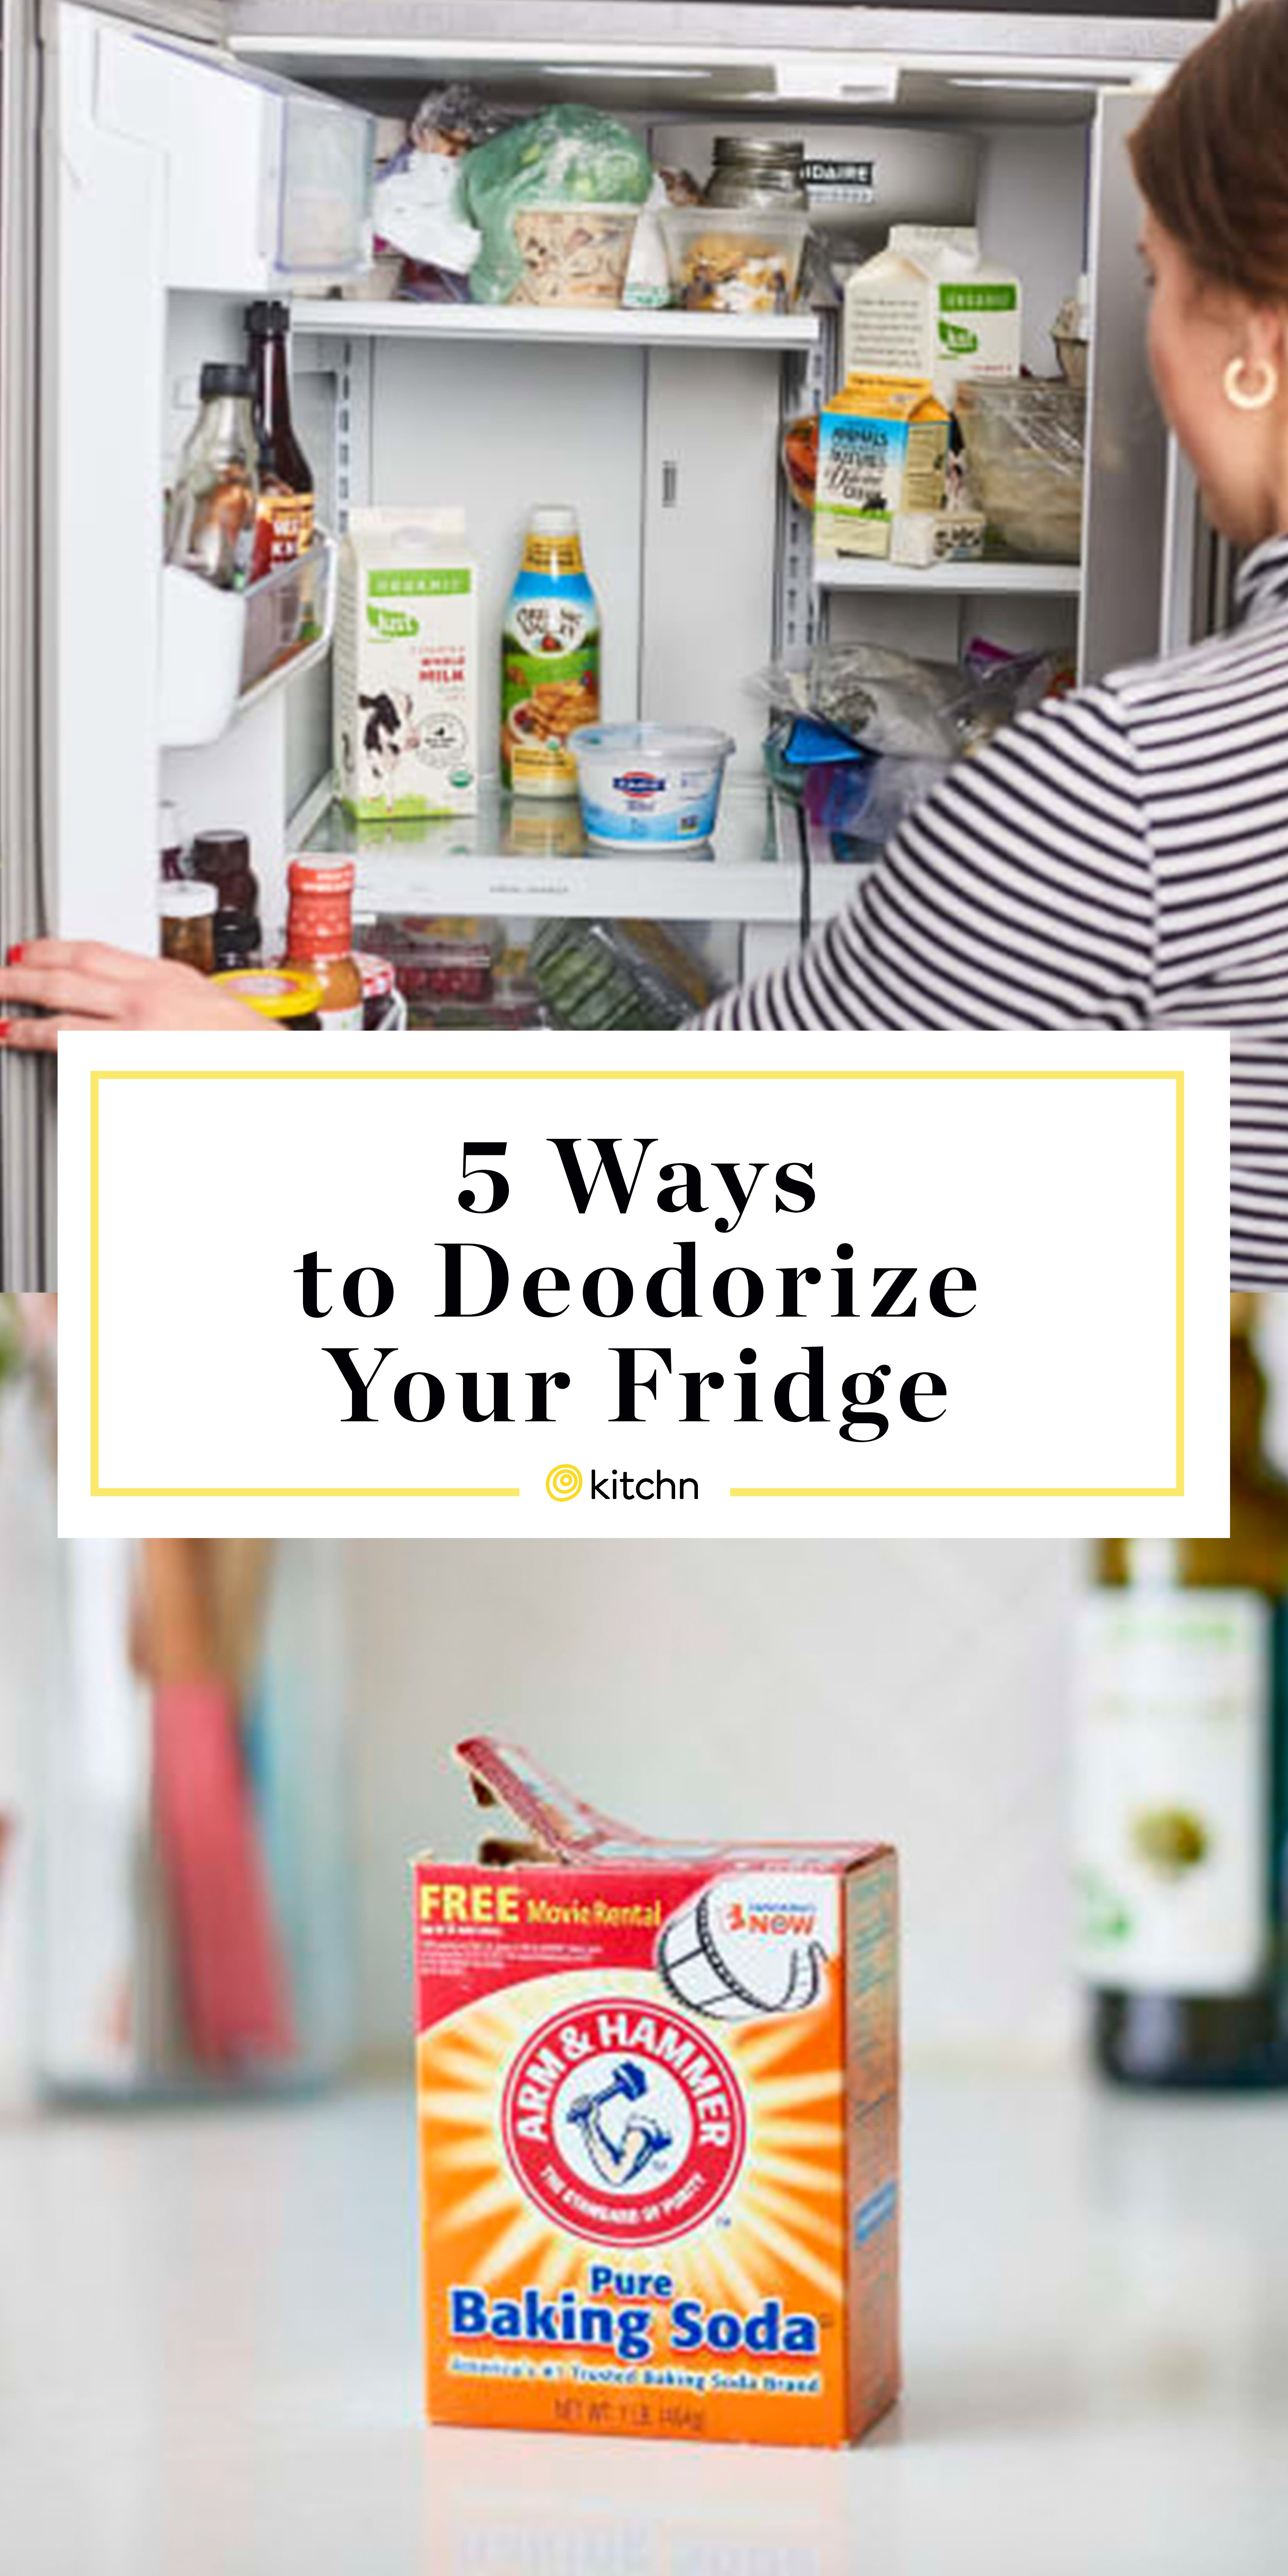 How to Deodorize a Fridge